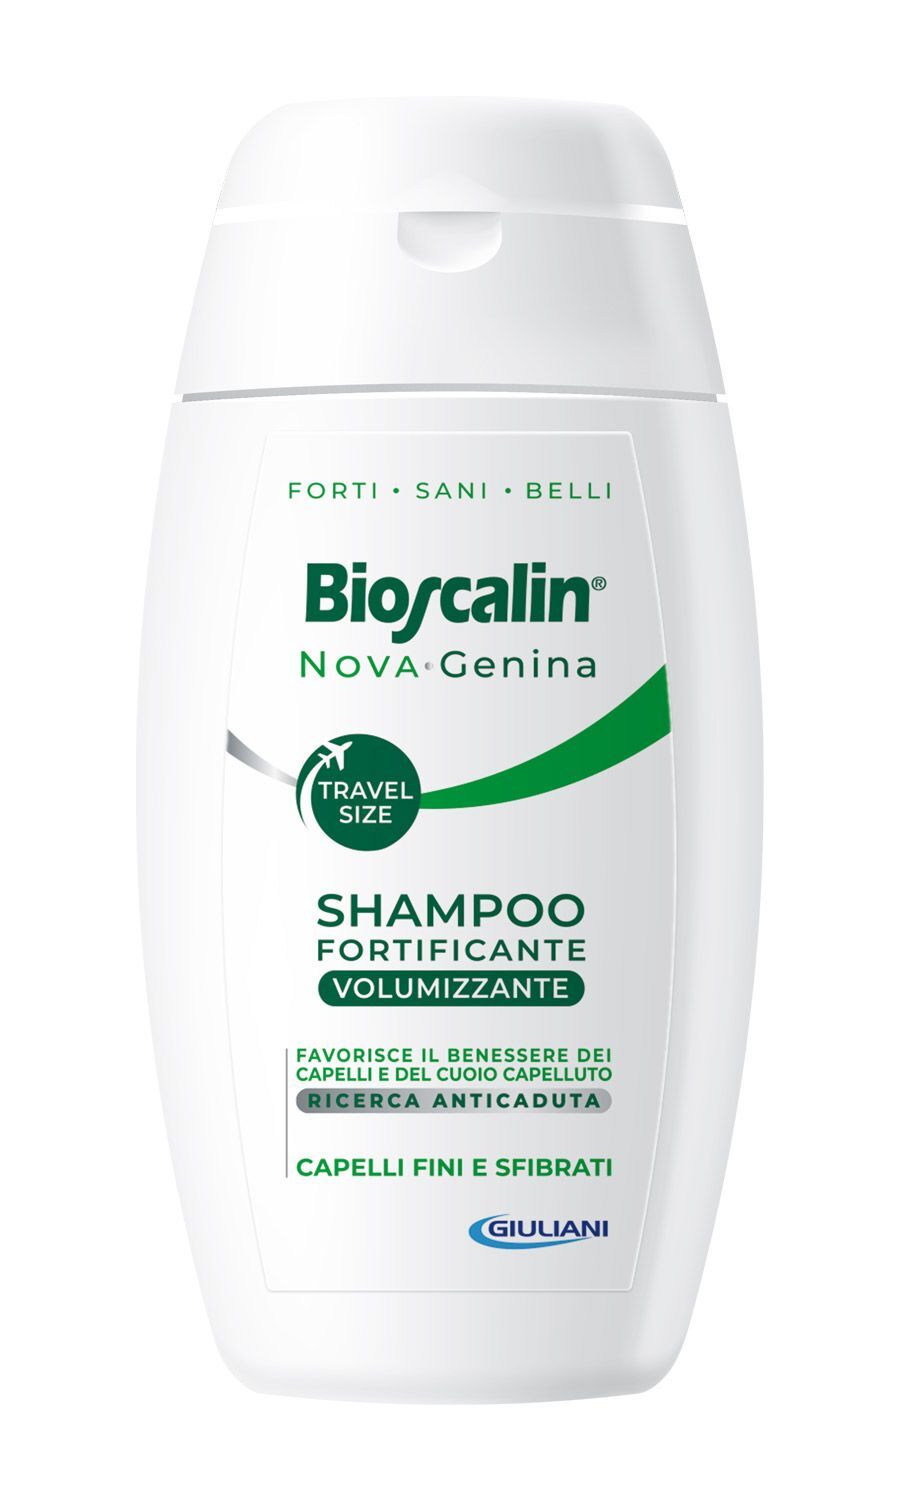 Bioscalin Nova Genina Shampoo Fortificante Volumizzante 100ml